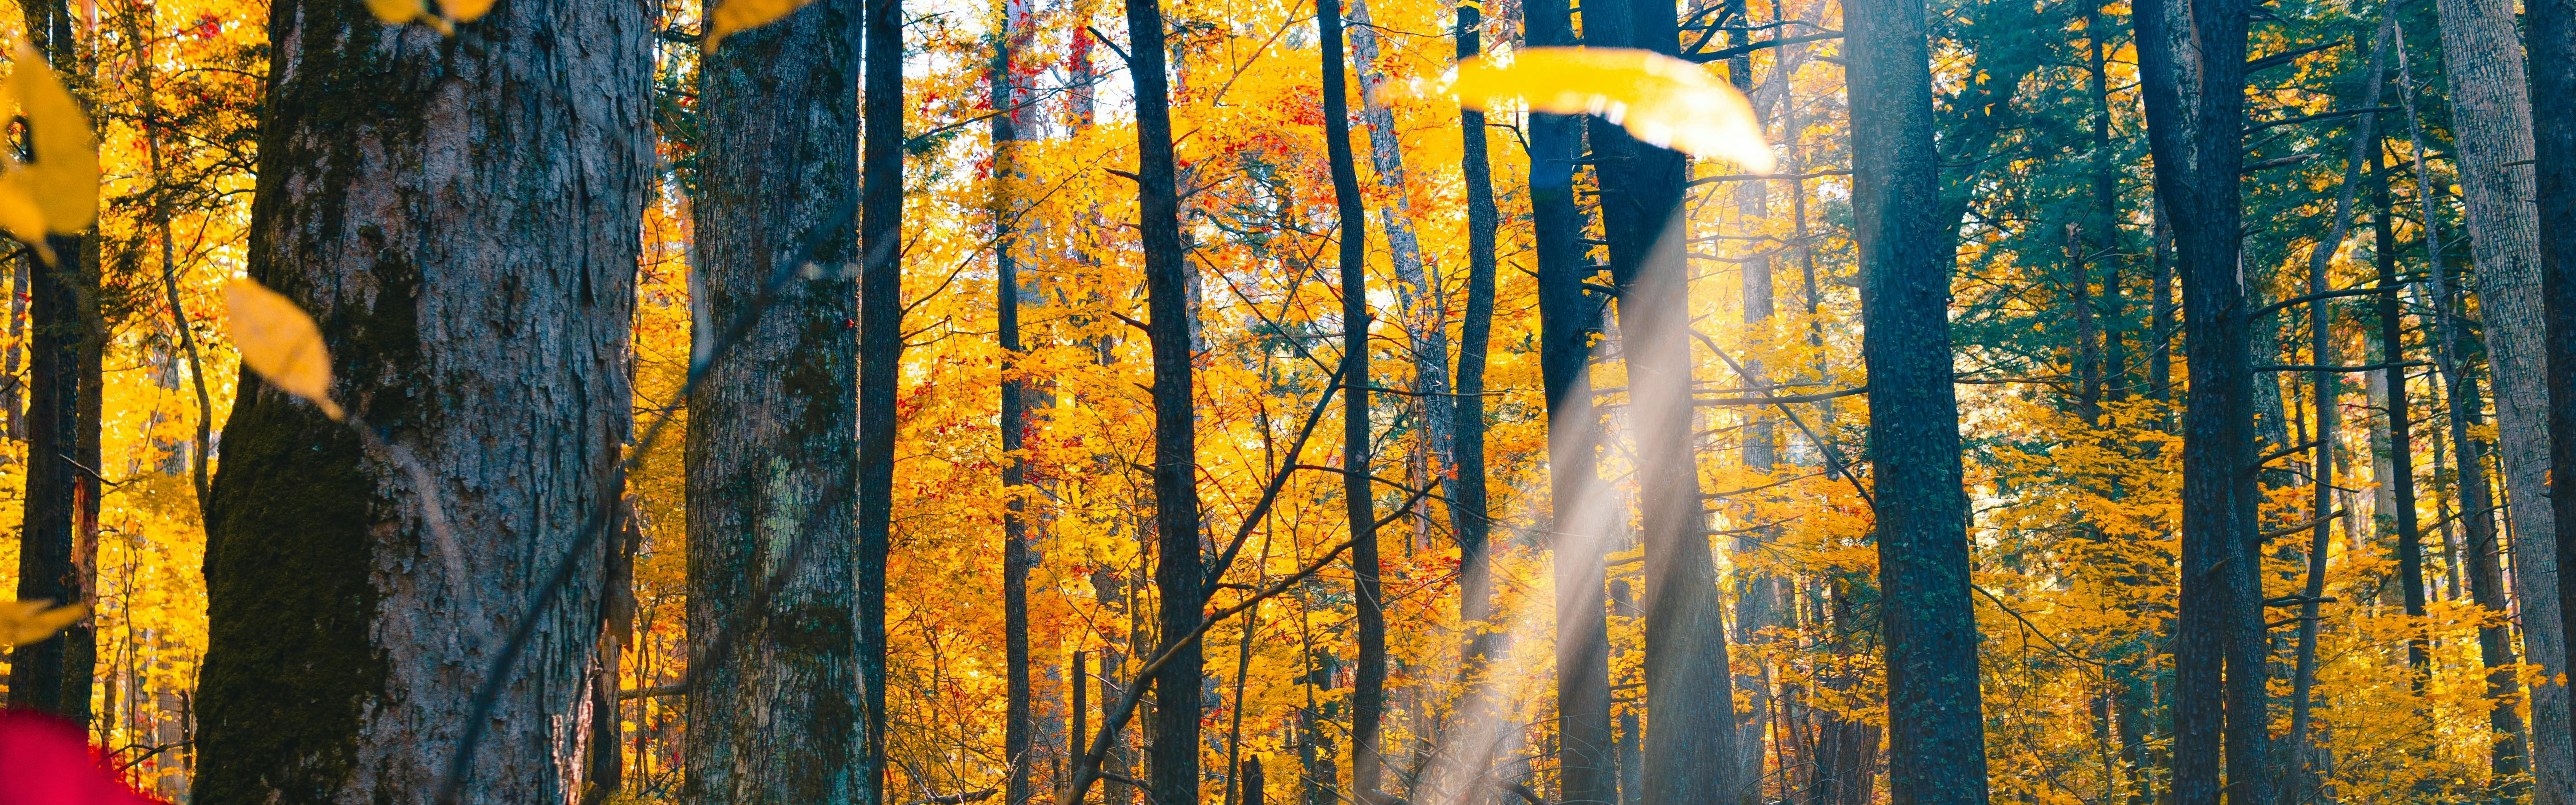 Sunlight filters through tall, slender trees and illuminates golden, yellow foliage. 